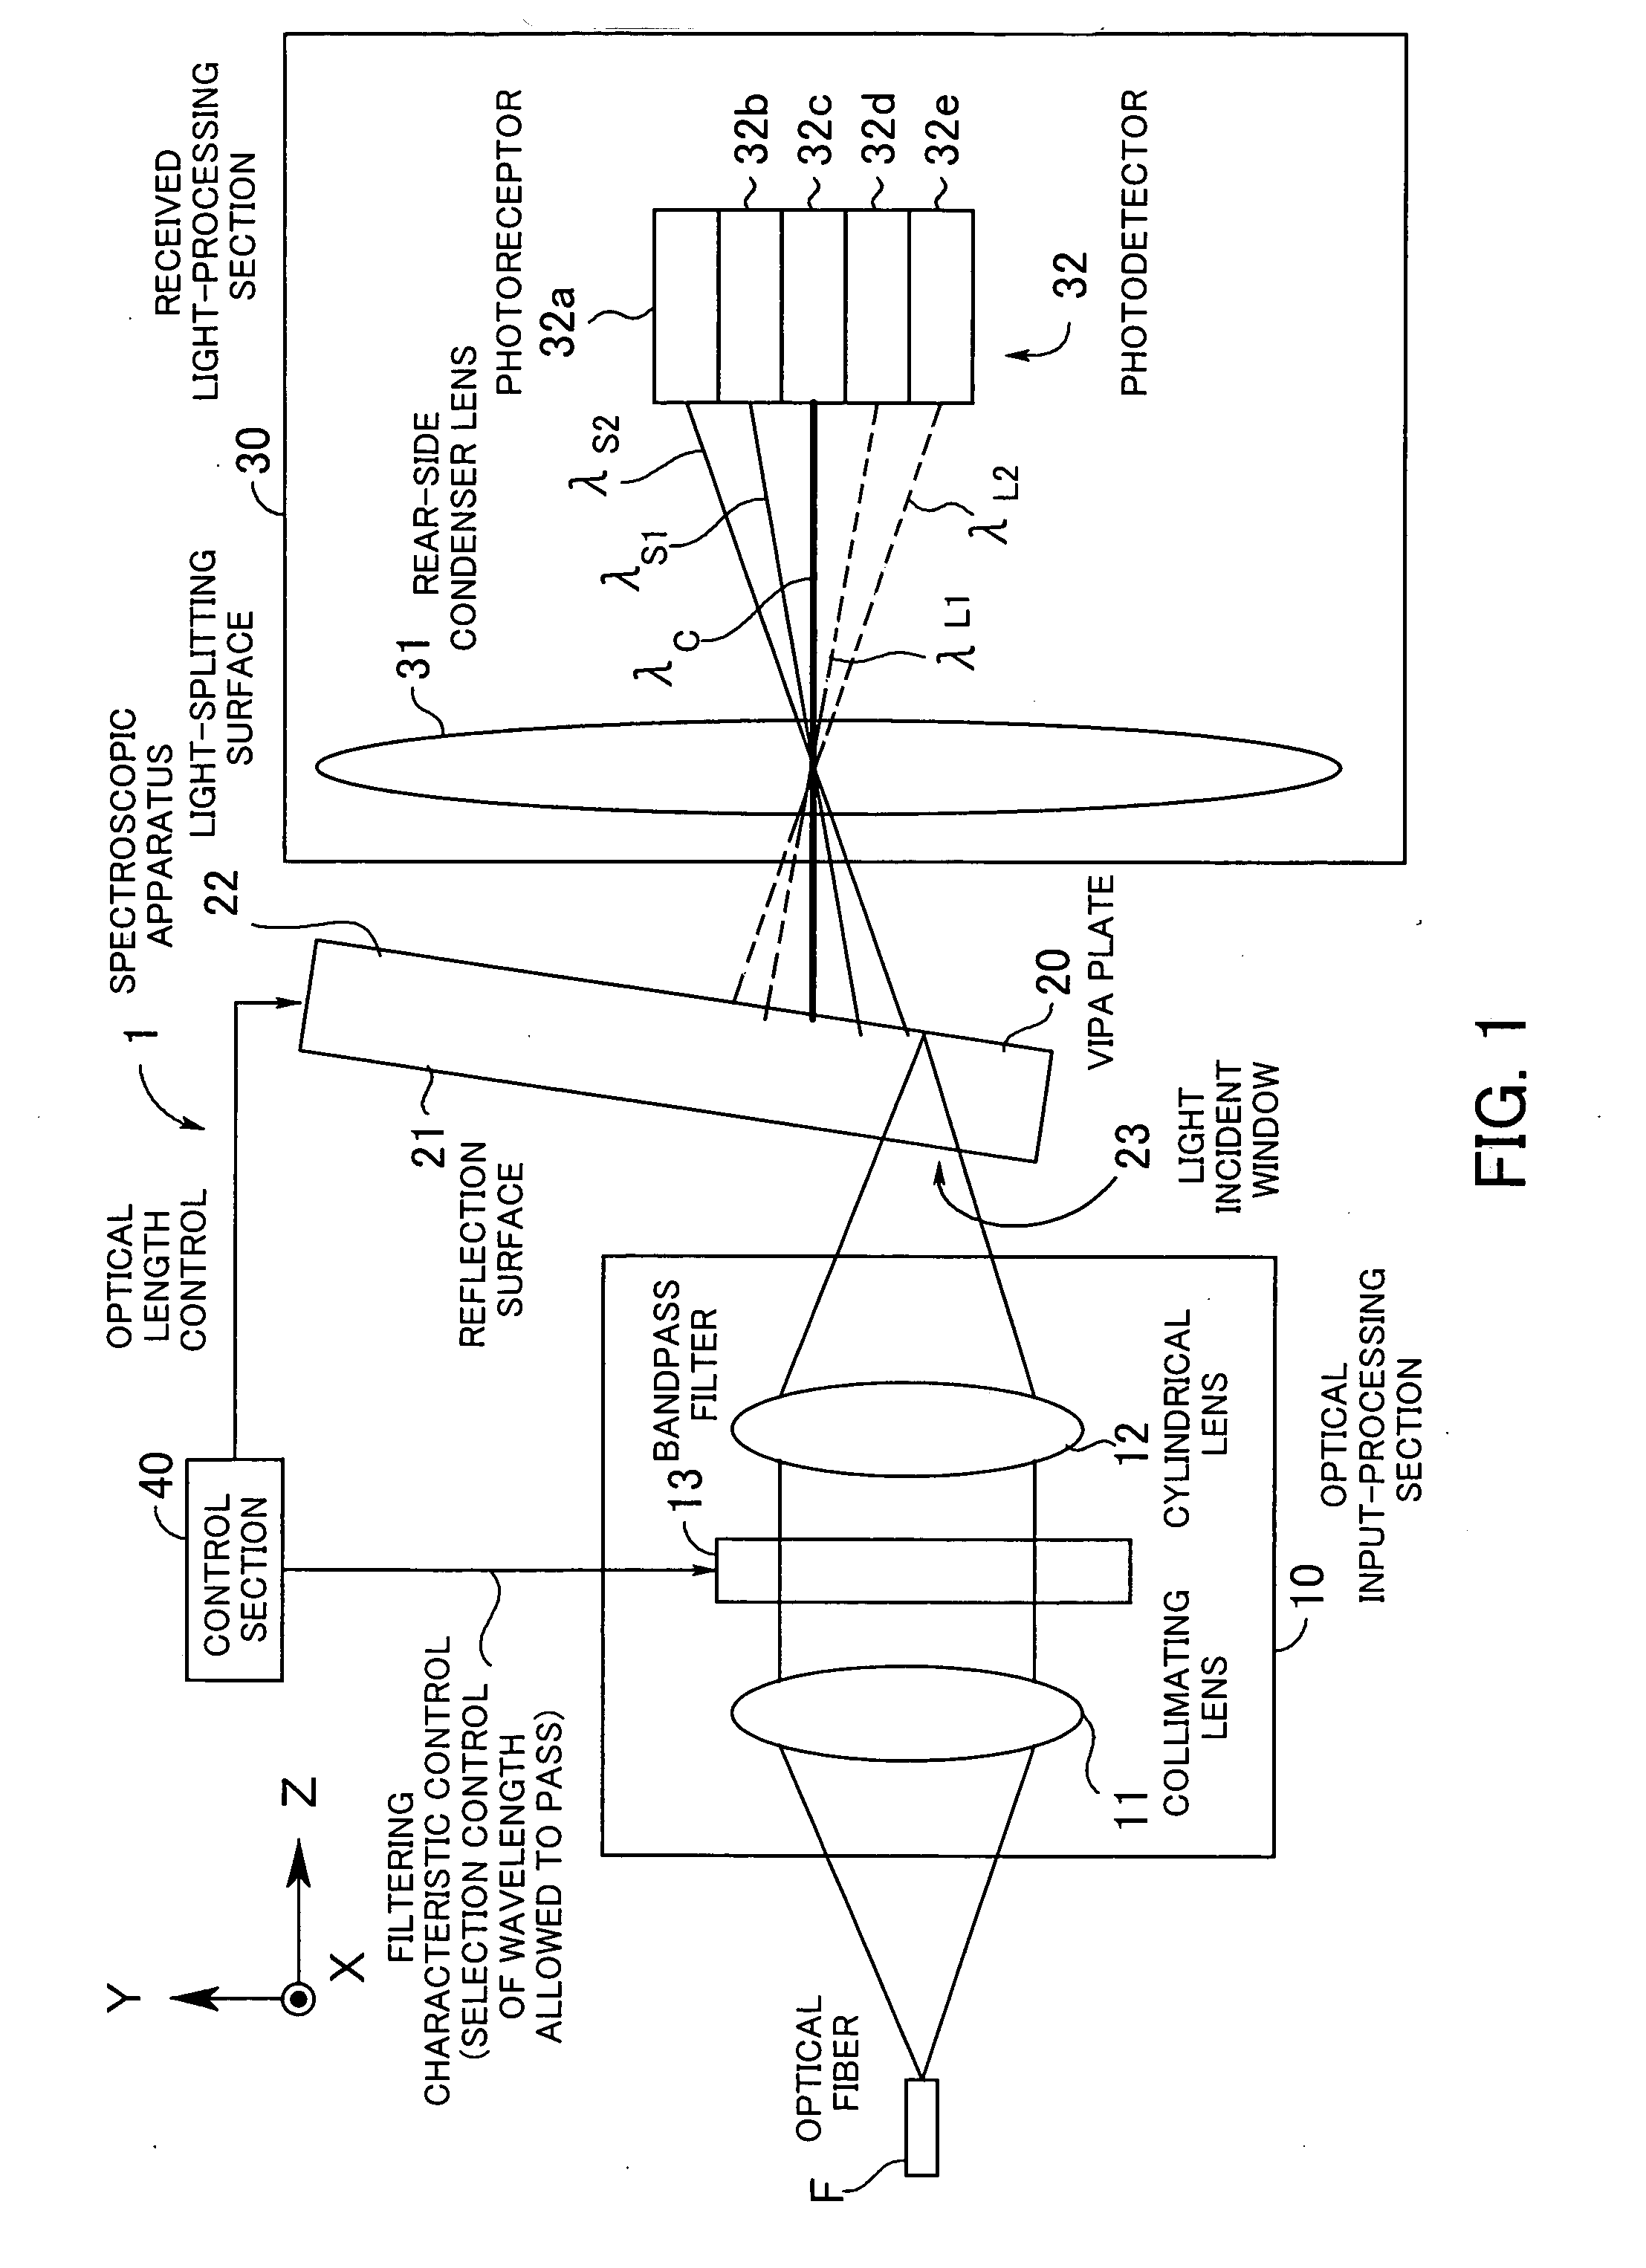 Spectroscopic apparatus